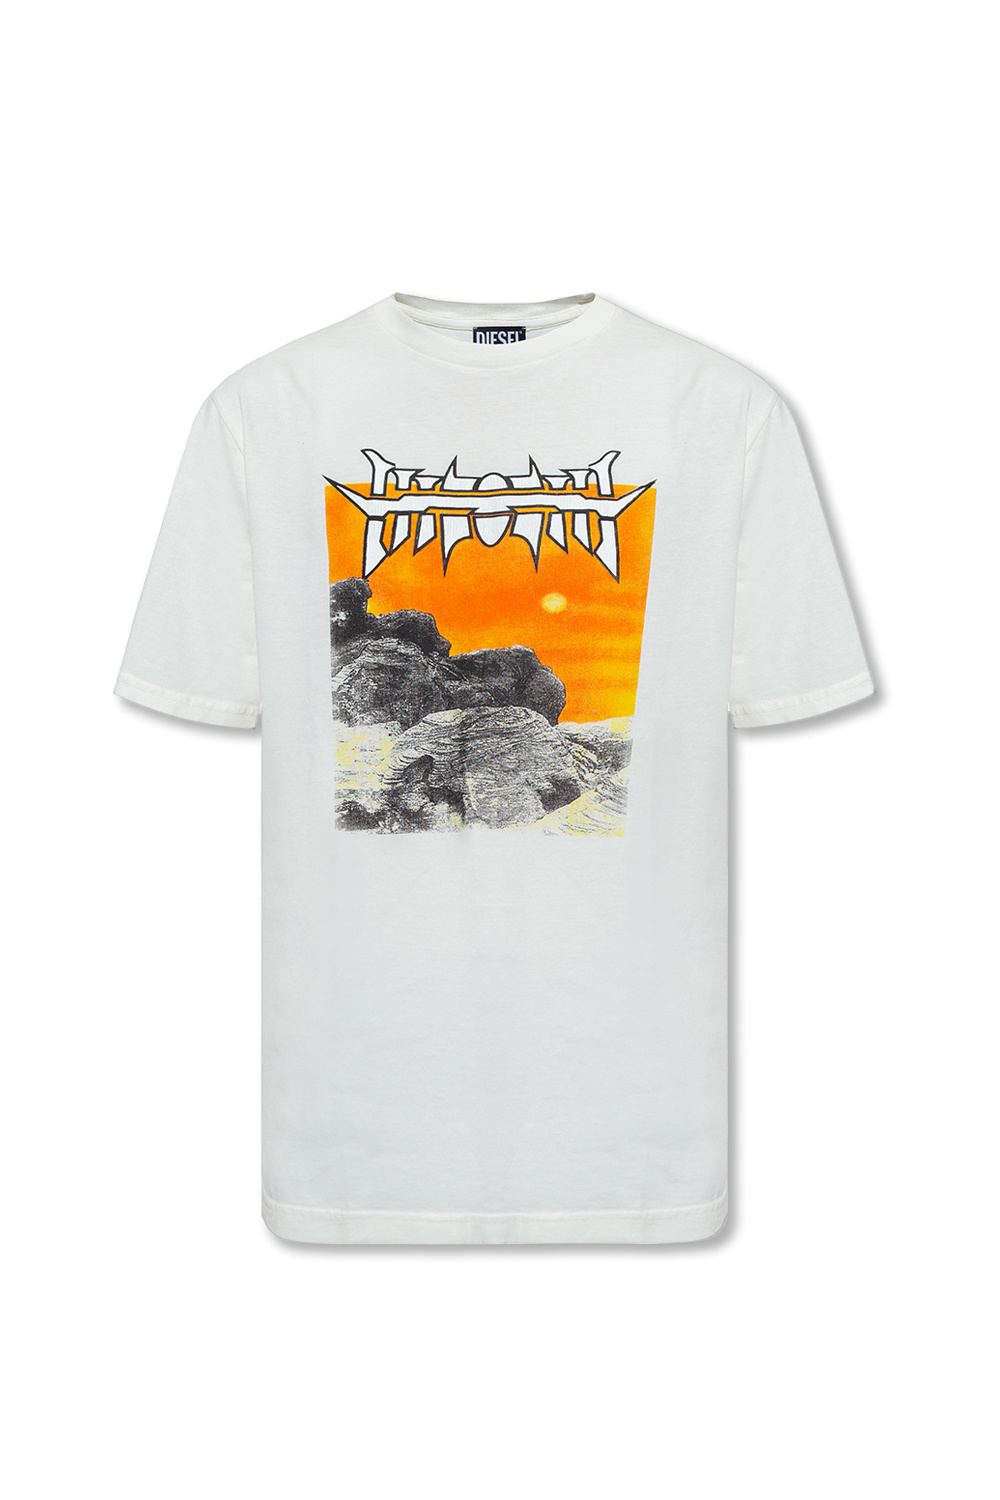 StclaircomoShops | clubwear shirt - vsct t \'T Men\'s - - anthracite white shirt 2 Clothing T | Diesel melange 1 Just\' printed on